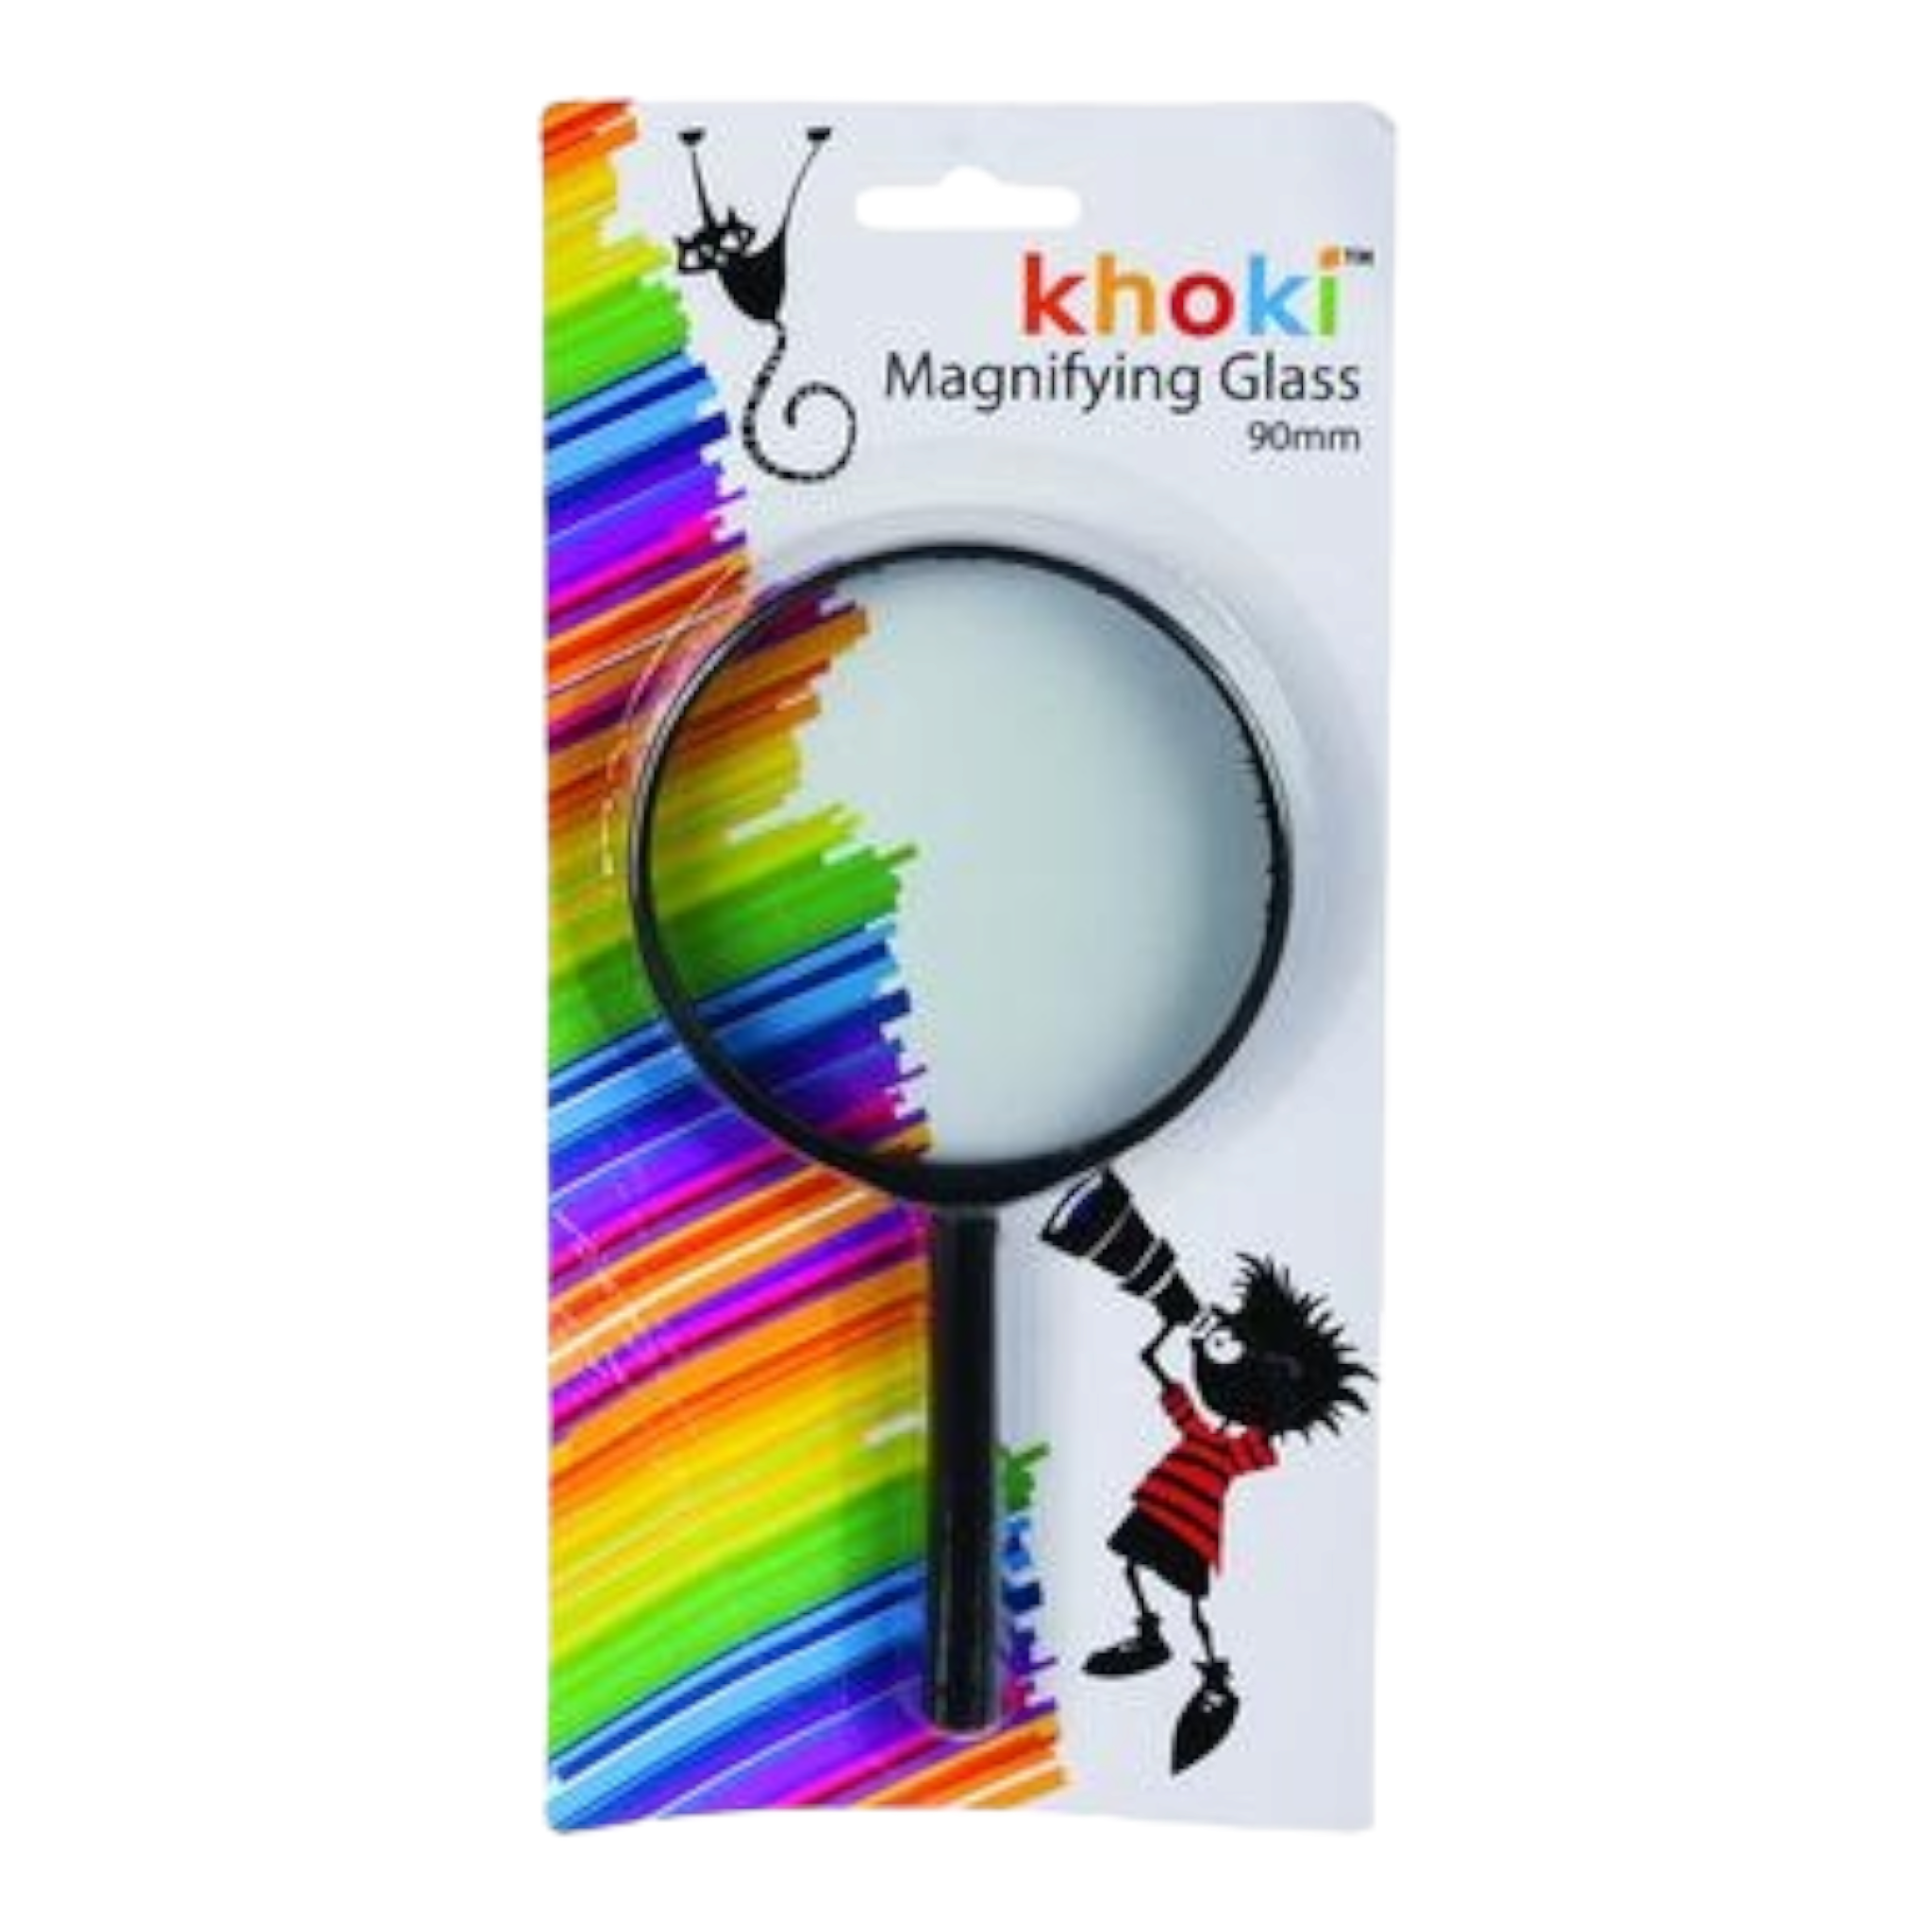 Khoki Magnifying Glass 90mm